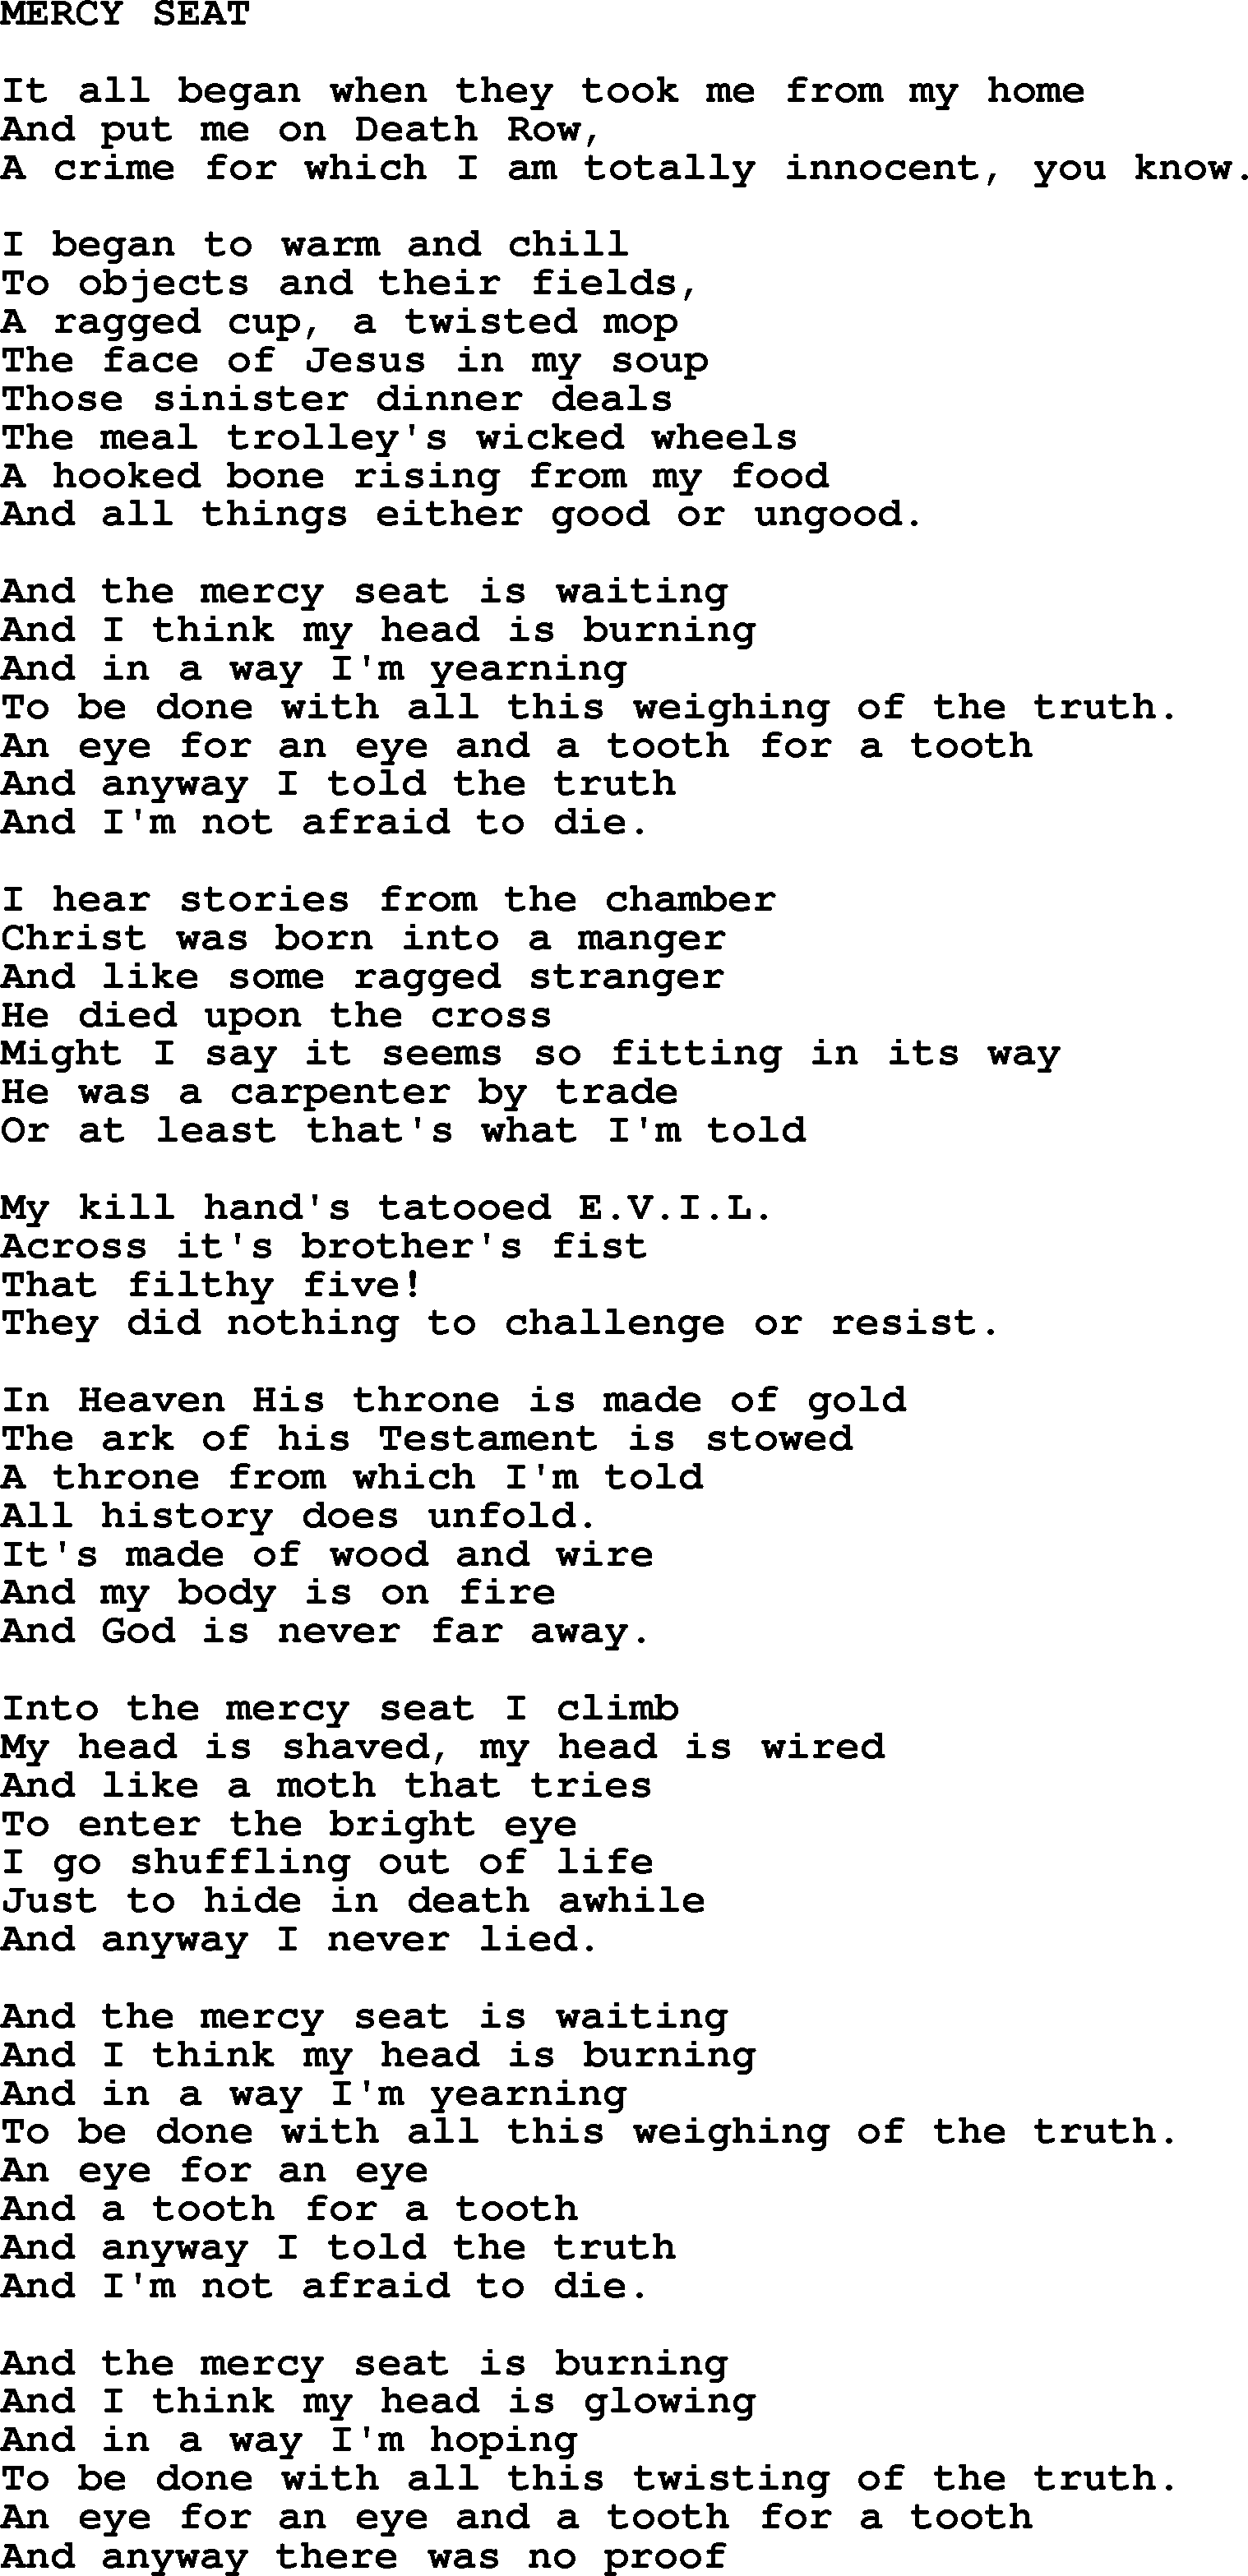 Johnny Cash song Mercy Seat.txt lyrics